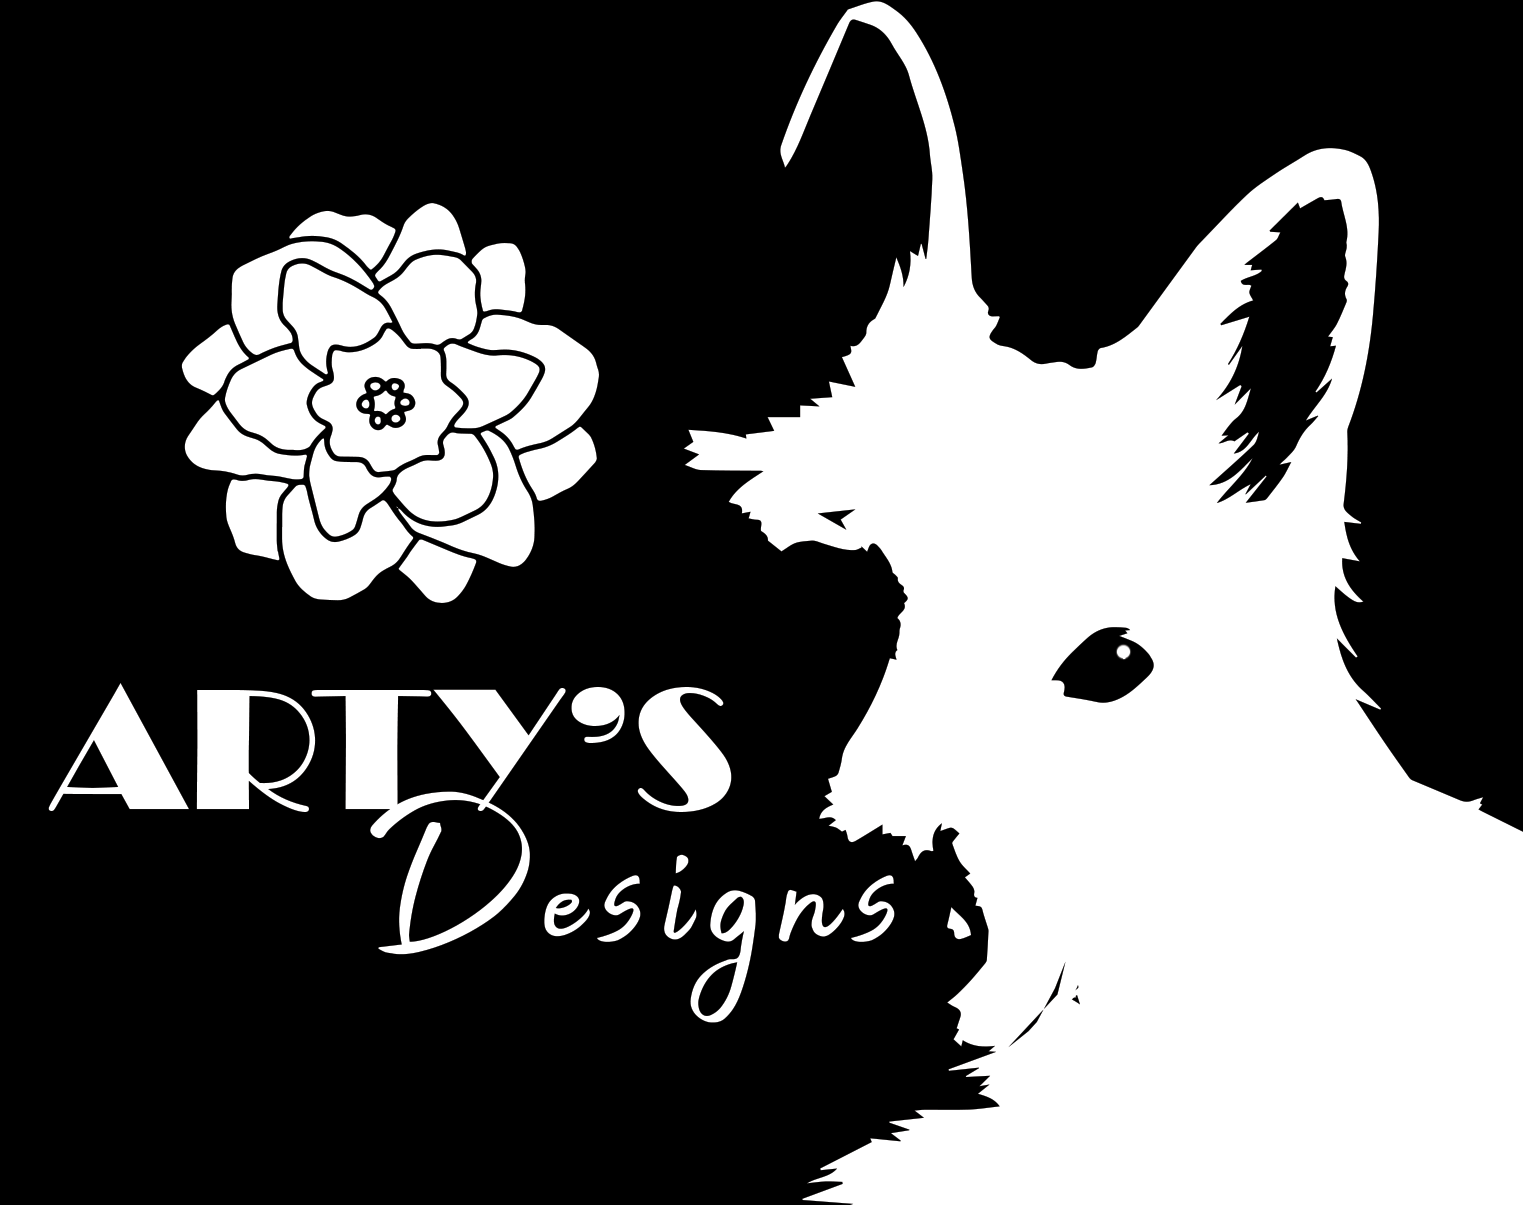 Arty's Designs